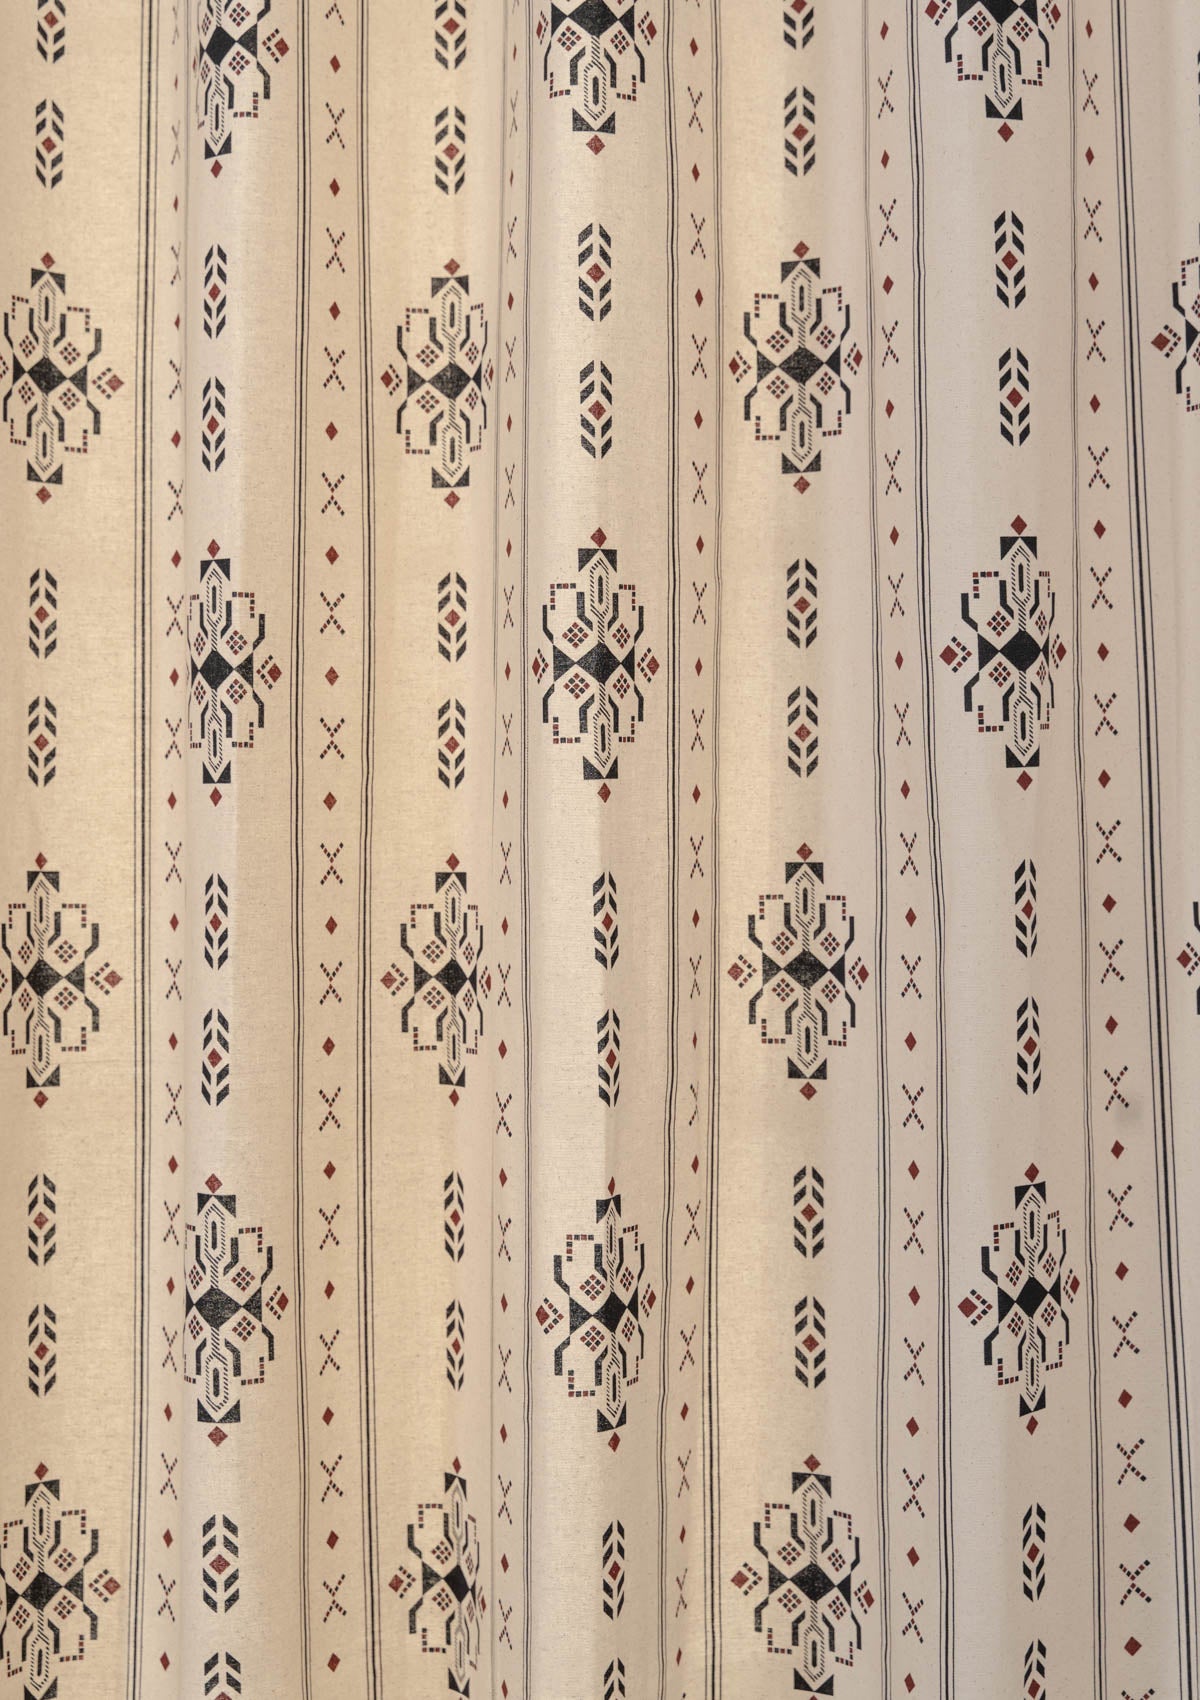 Gypsy 100% cotton geometric curtain for living room - Room darkening - Black - Single